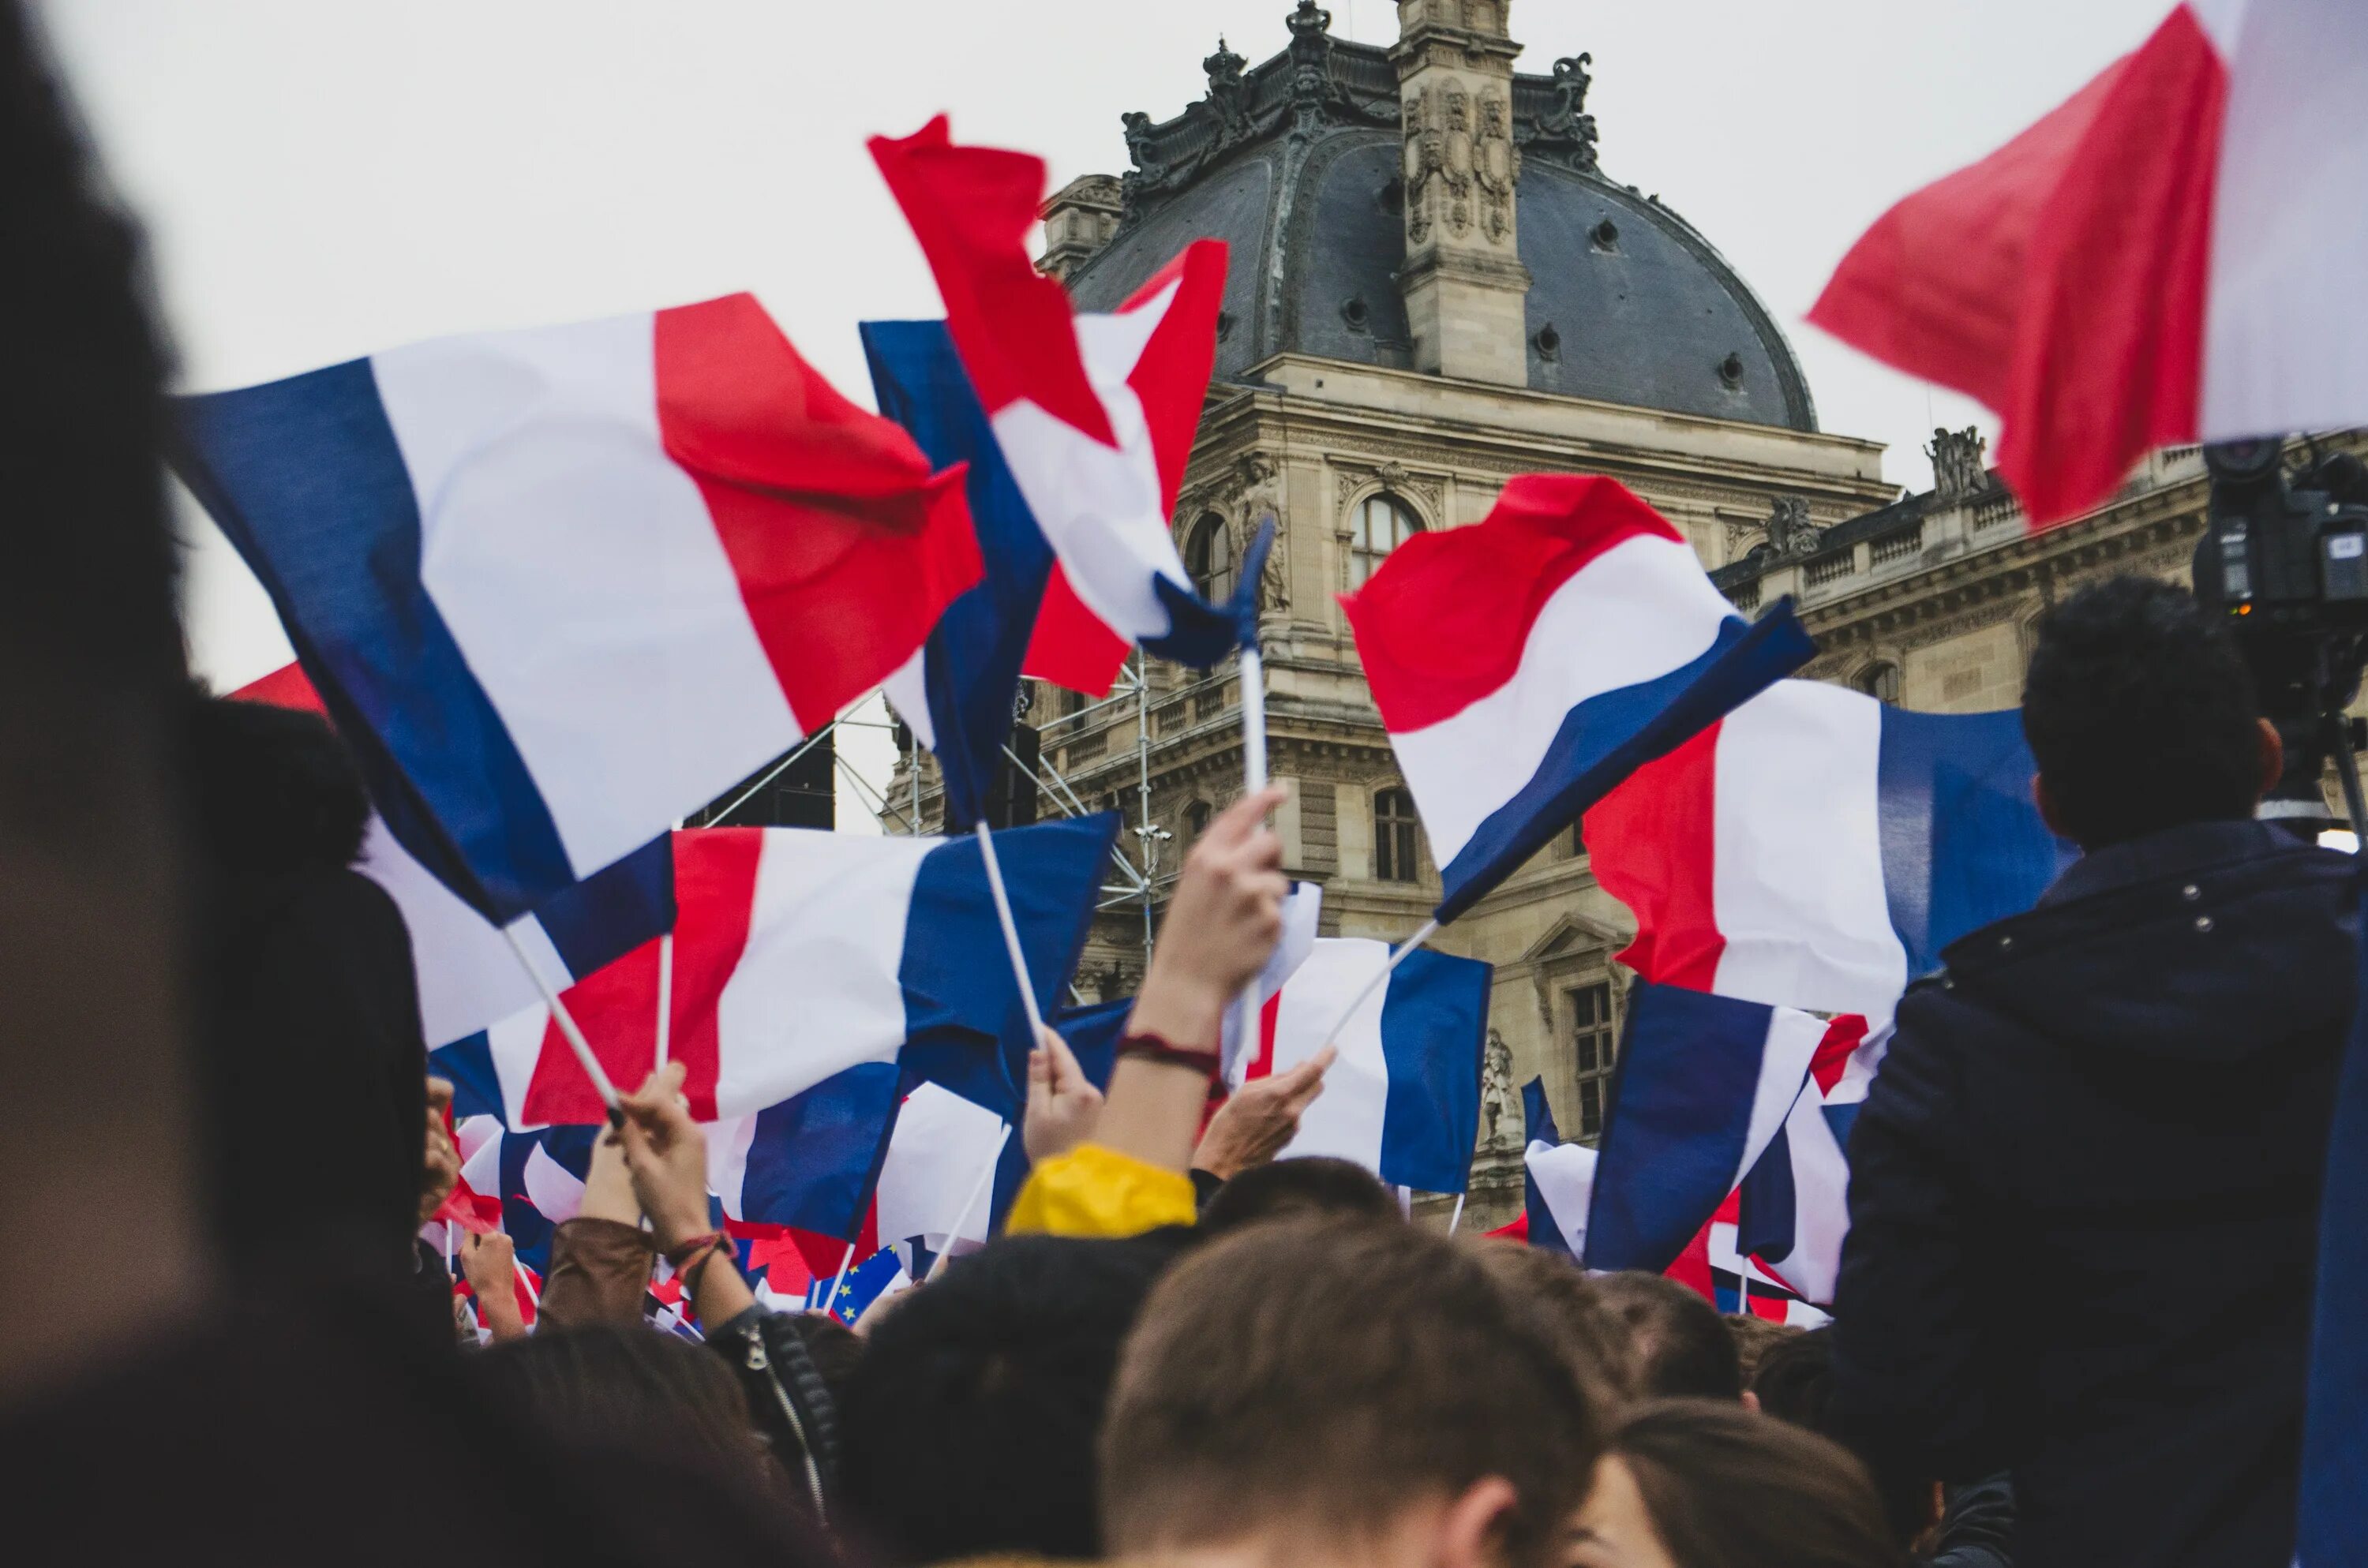 Реакция французов. Франция власть. Франция и французы. Выборы во Франции. Предприниматели Франции.